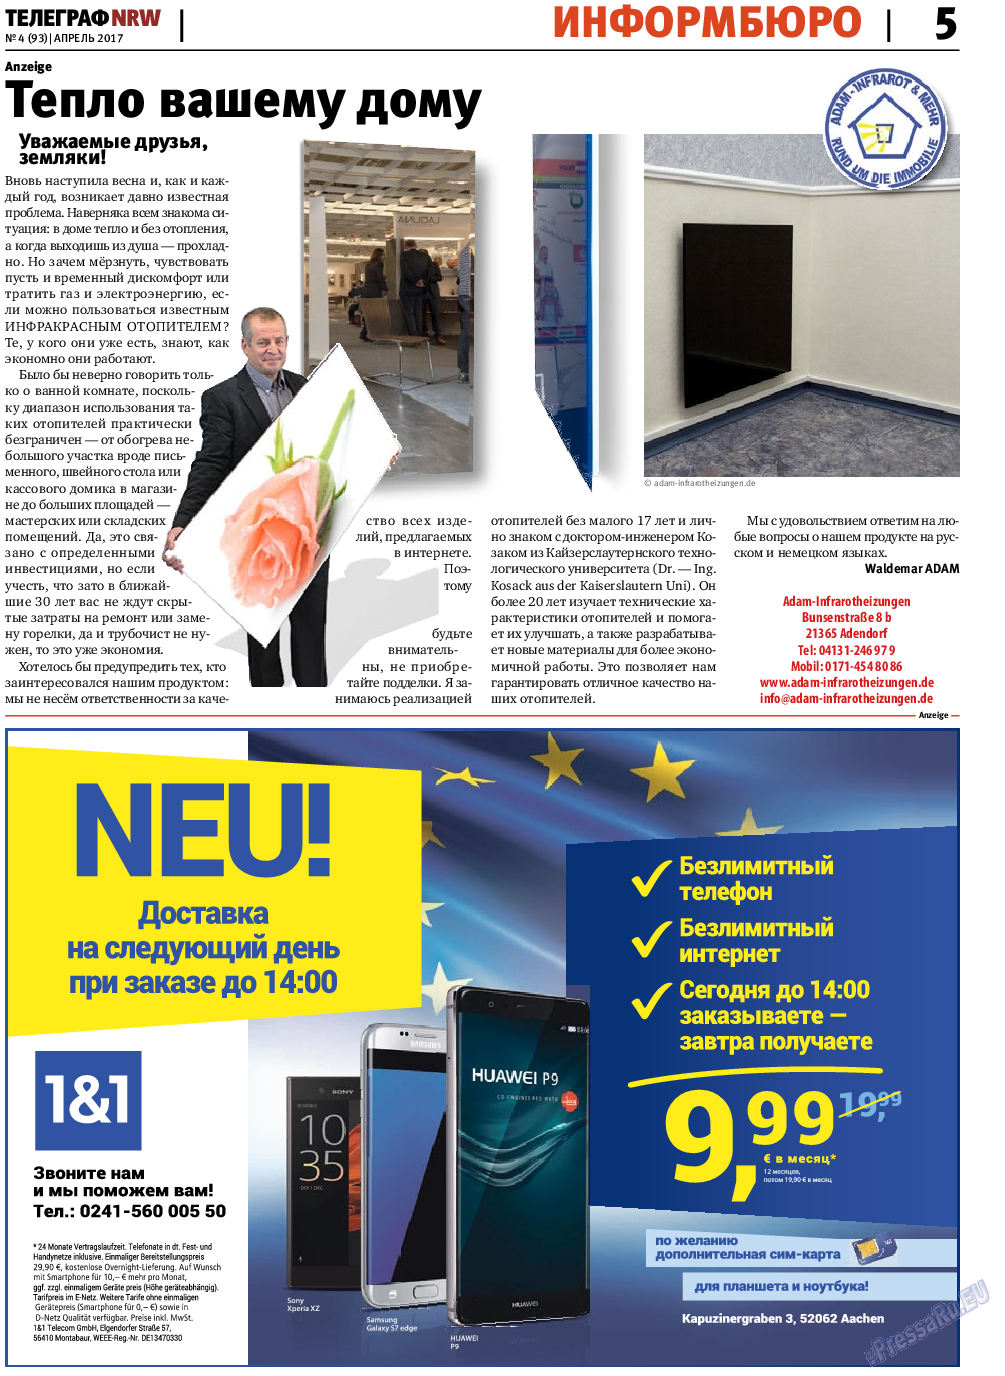 Телеграф NRW, газета. 2017 №4 стр.5